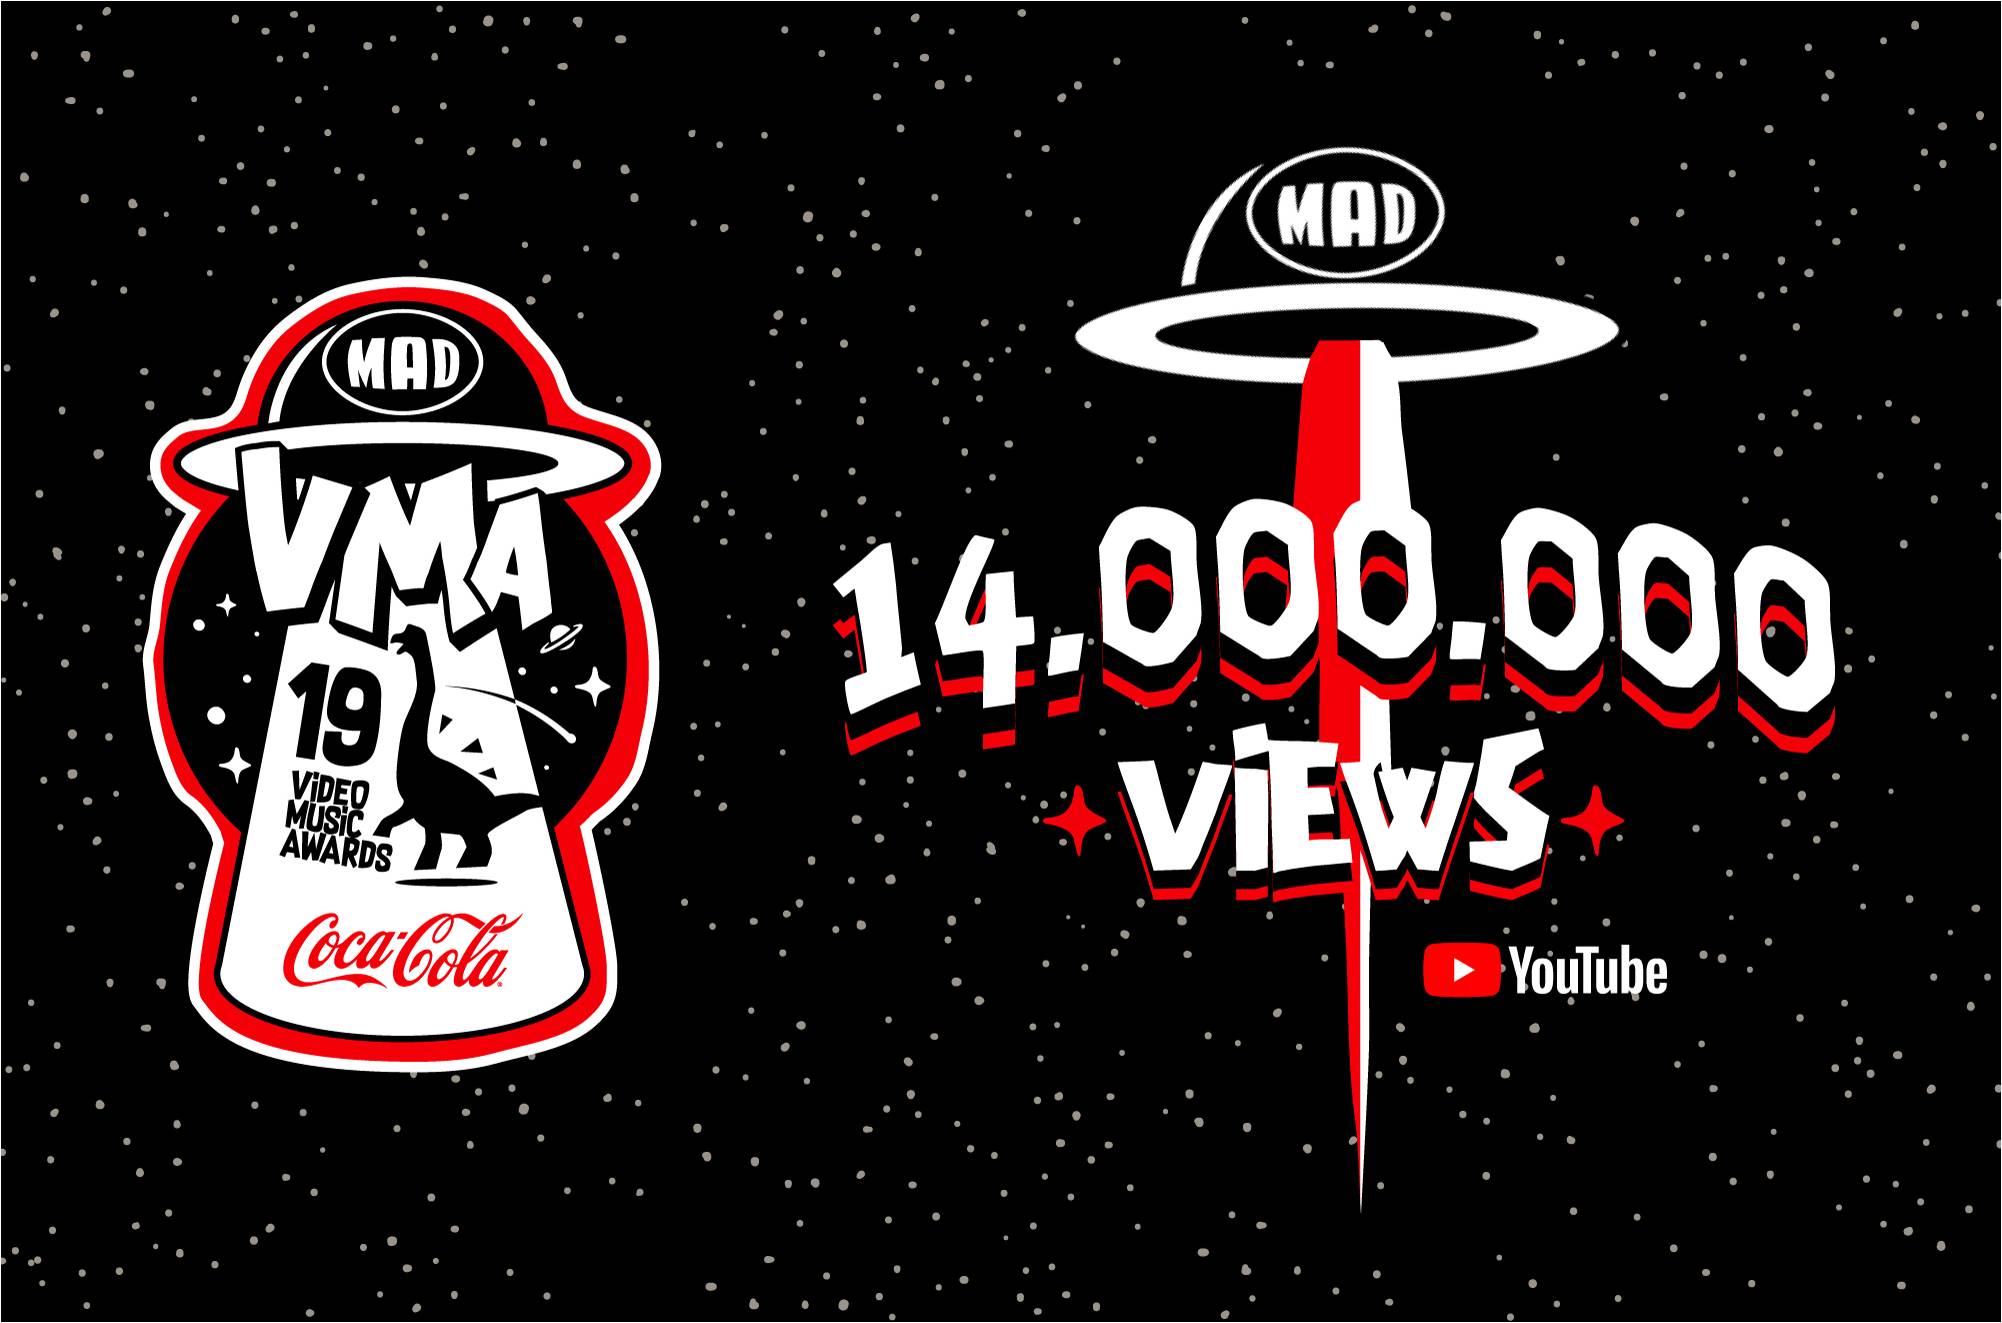 Mad Video Music Awards βρίσκονται στις κορυφαίες τάσεις Youtube ξεπερνώντας 14 εκατομμύρια